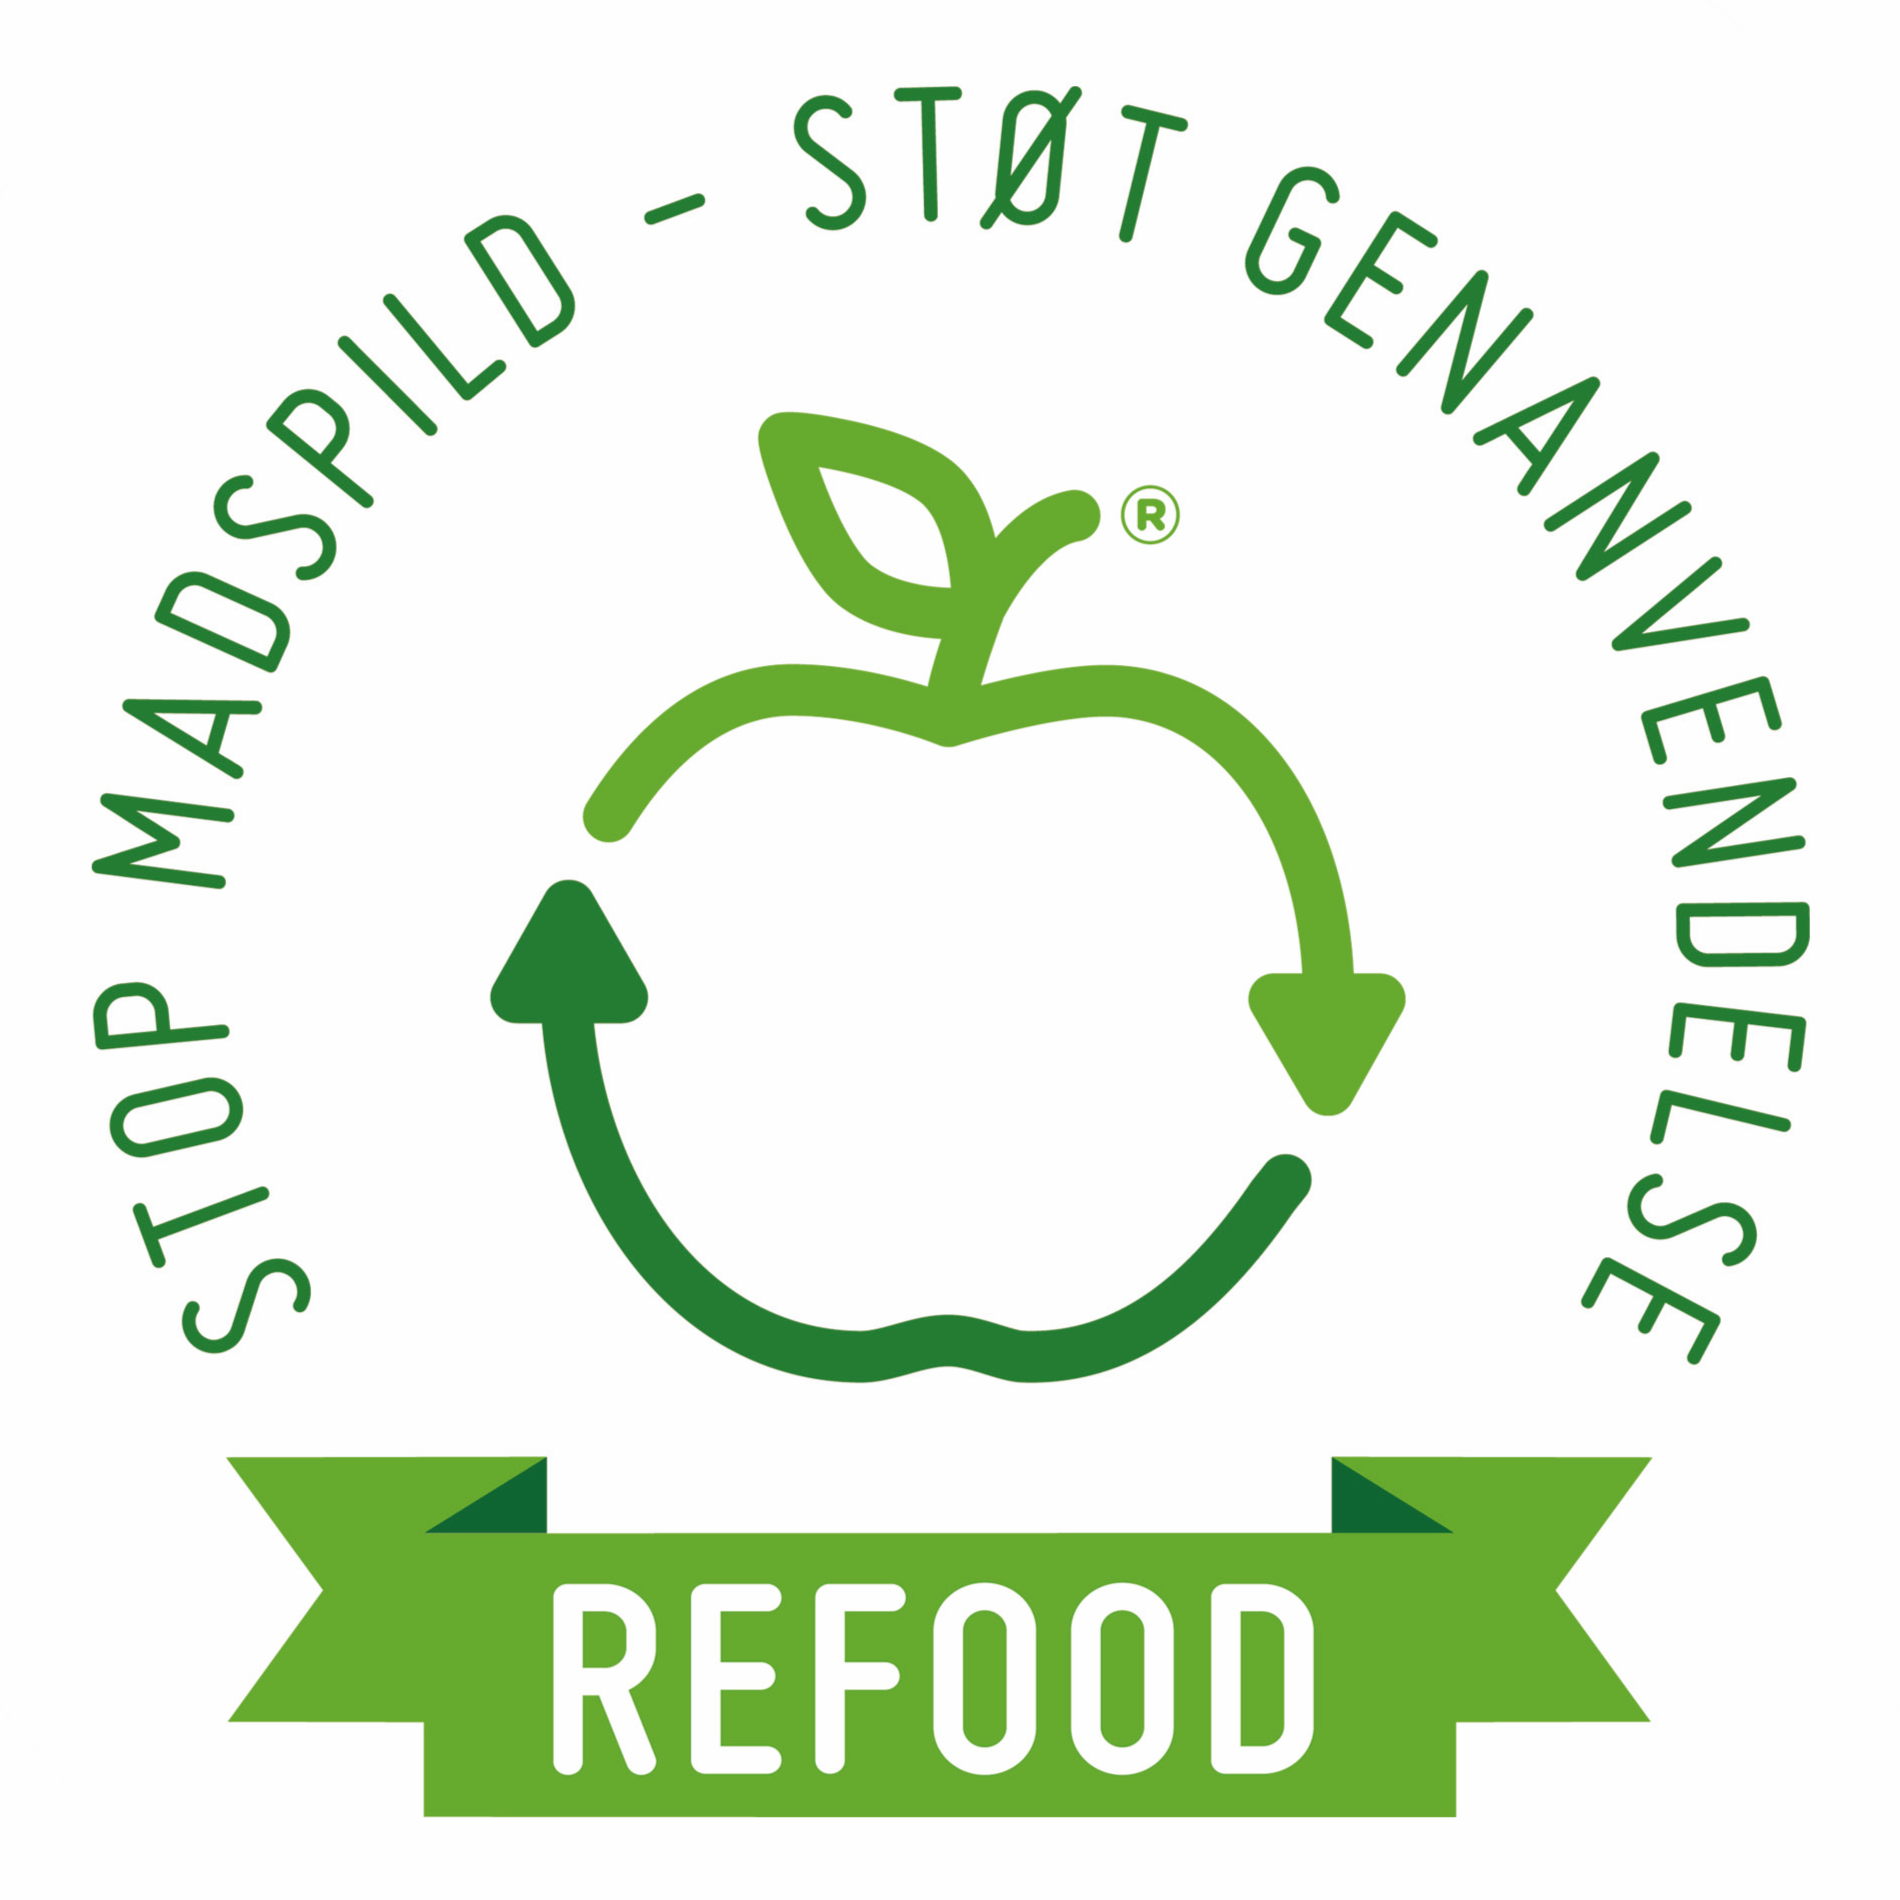 refood logo